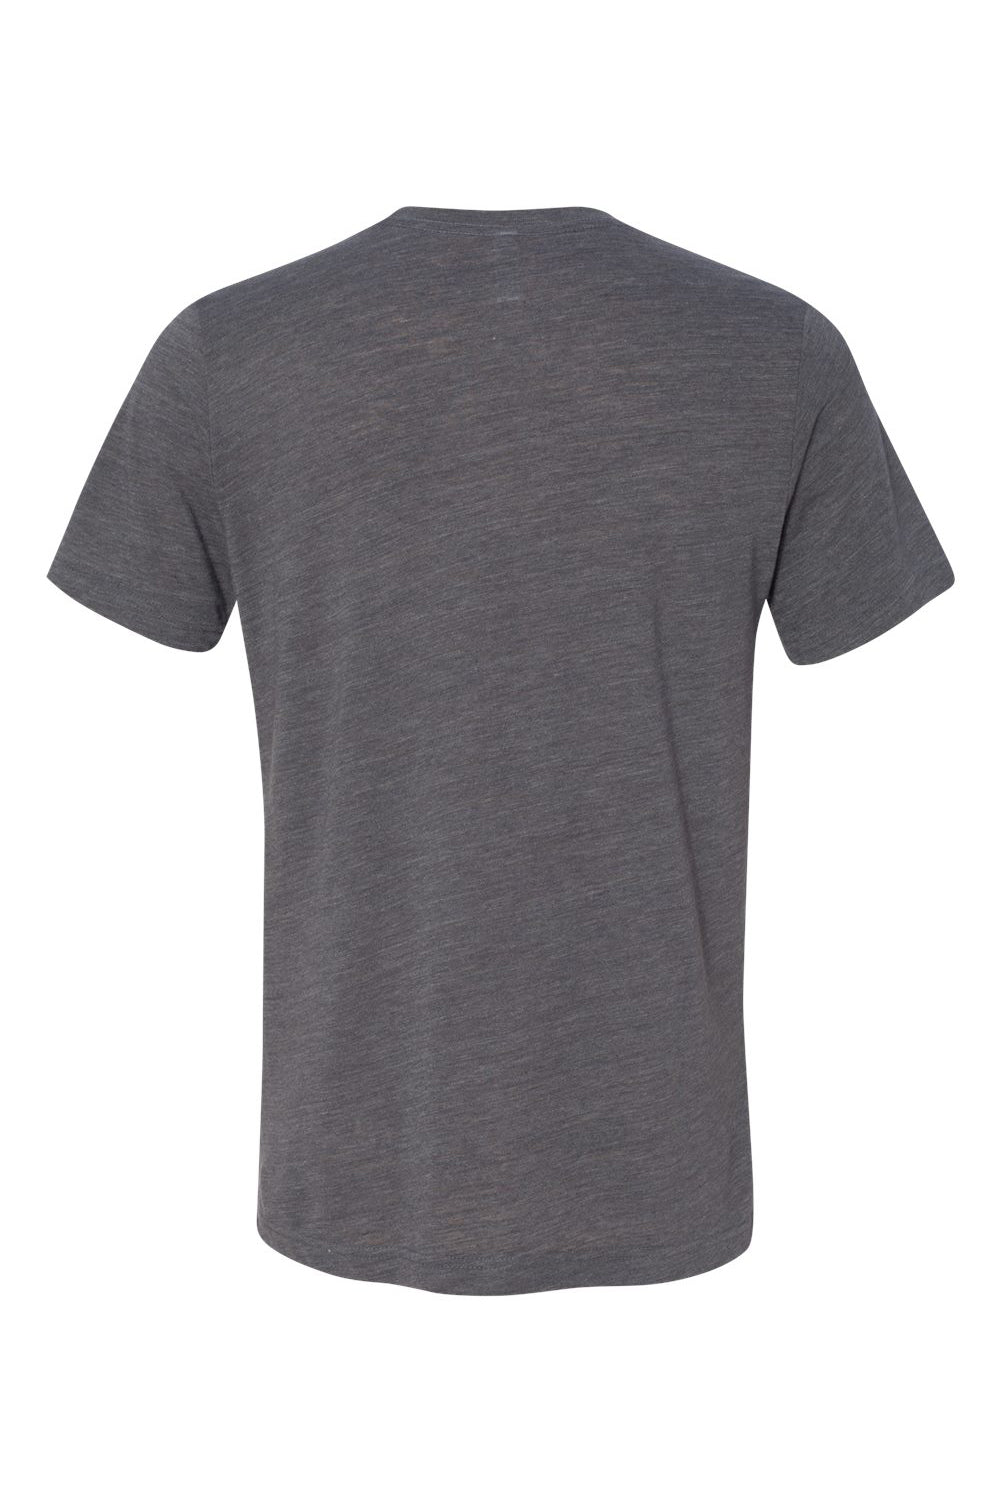 Bella + Canvas BC3650/3650 Mens Short Sleeve Crewneck T-Shirt Asphalt Grey Slub Flat Back